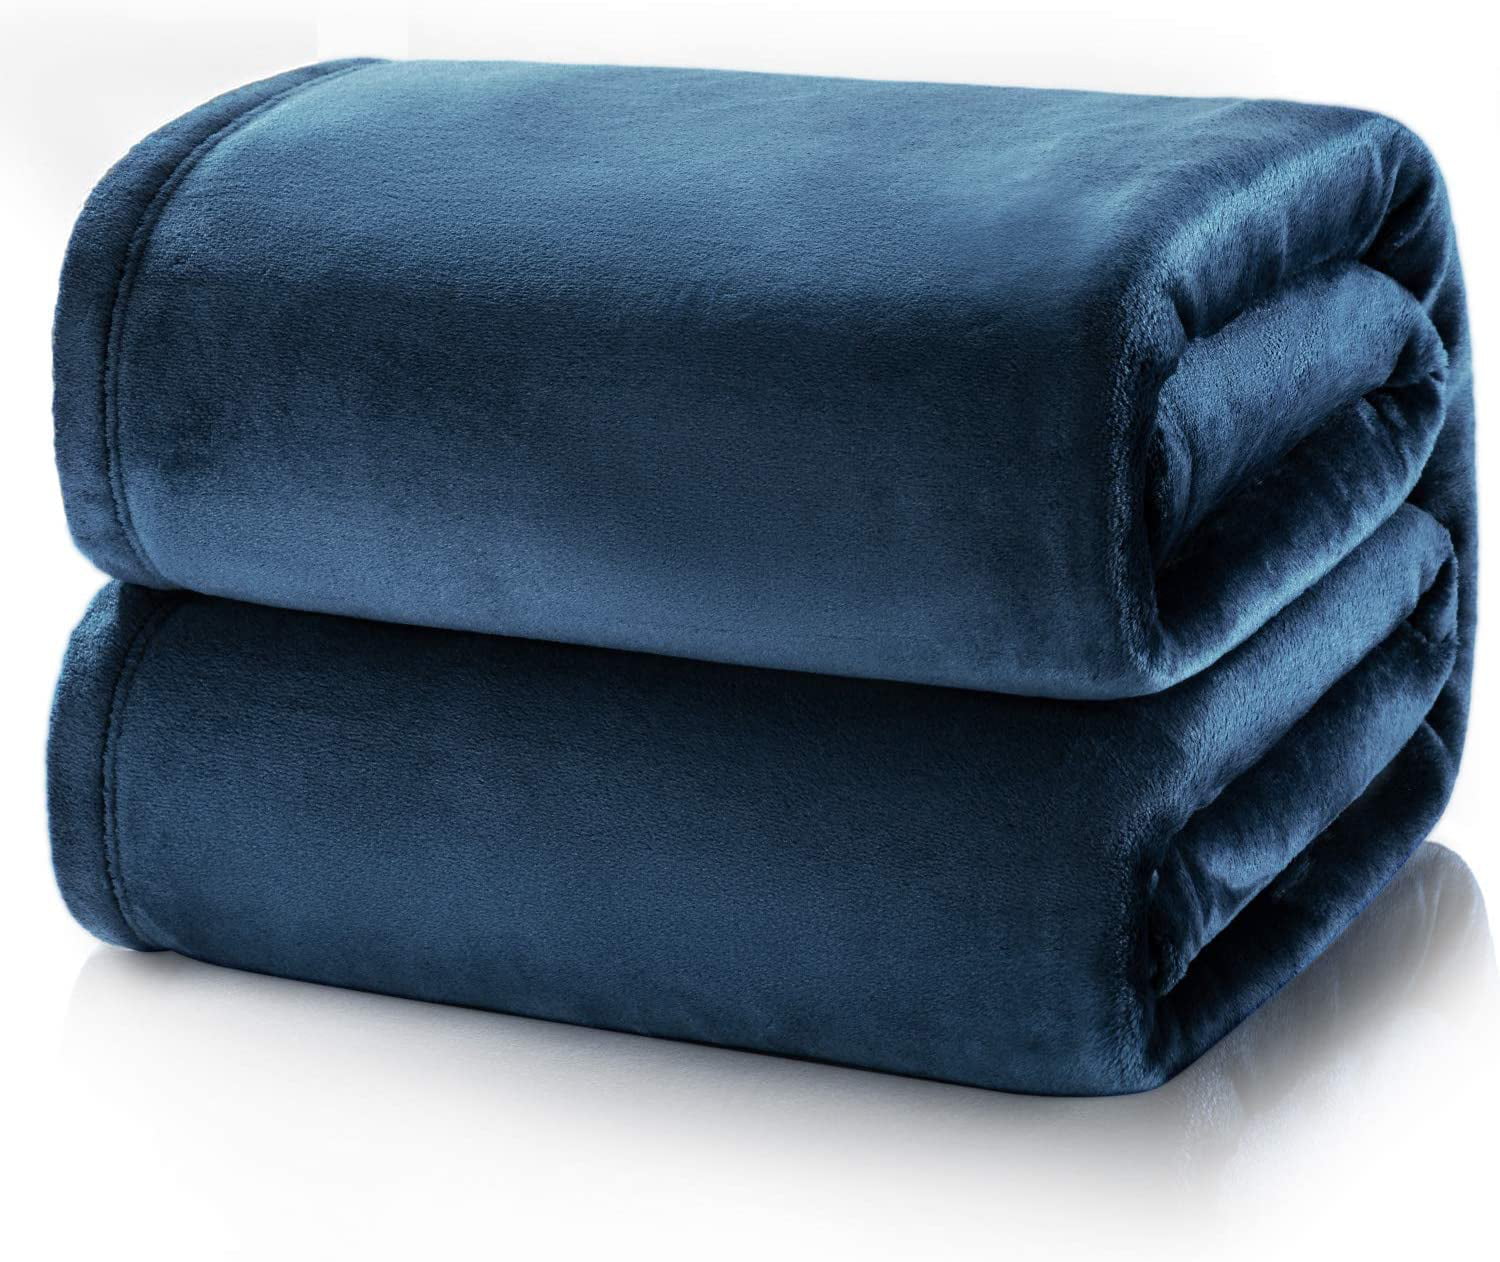 Details about   Bedsure Luxury Flannel Fleece Blanket Plush Blanket Throw Microfiber Bed Home 